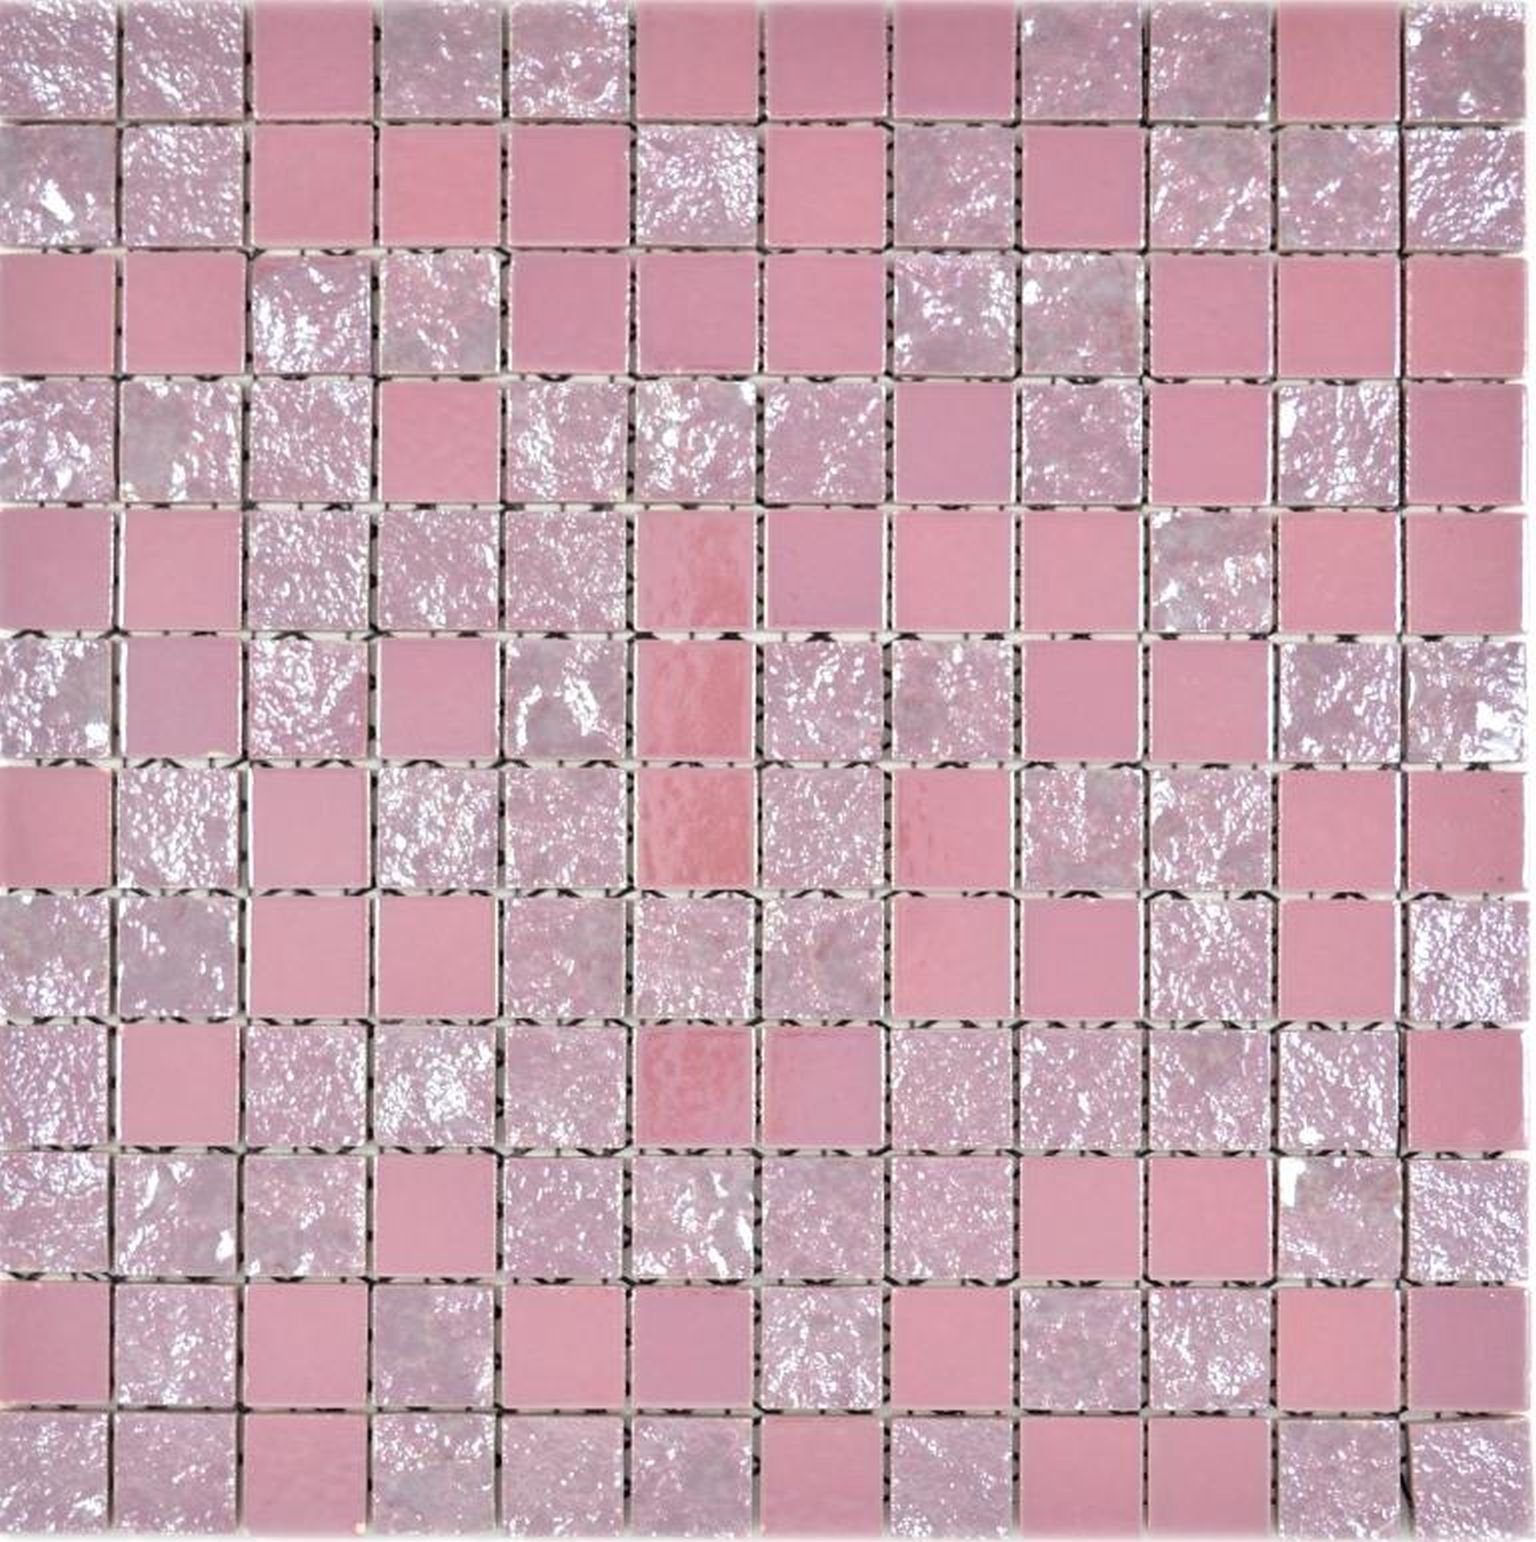 Mosani Mosaikfliesen Keramikmosaik Mosaikfliesen altrosa glänzend / 10 Matten